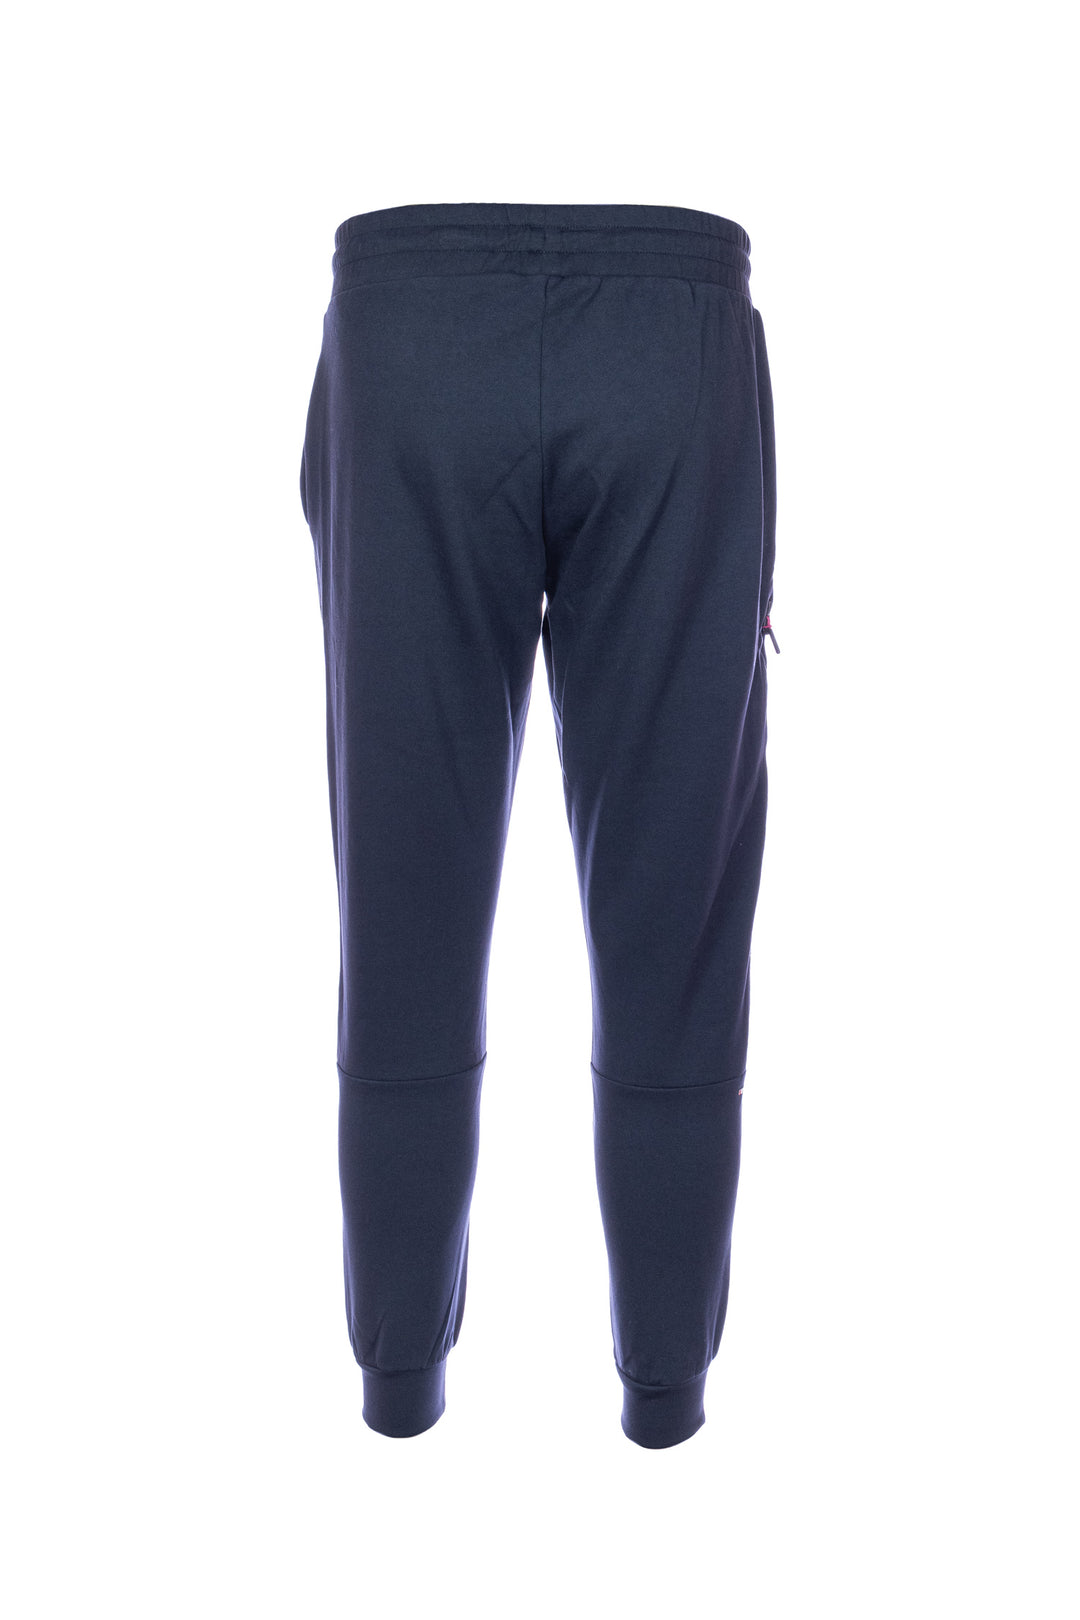 U.S. POLO ASSN. Pantalone sportivo blu navy in cotone stretch - Mancinelli 1954